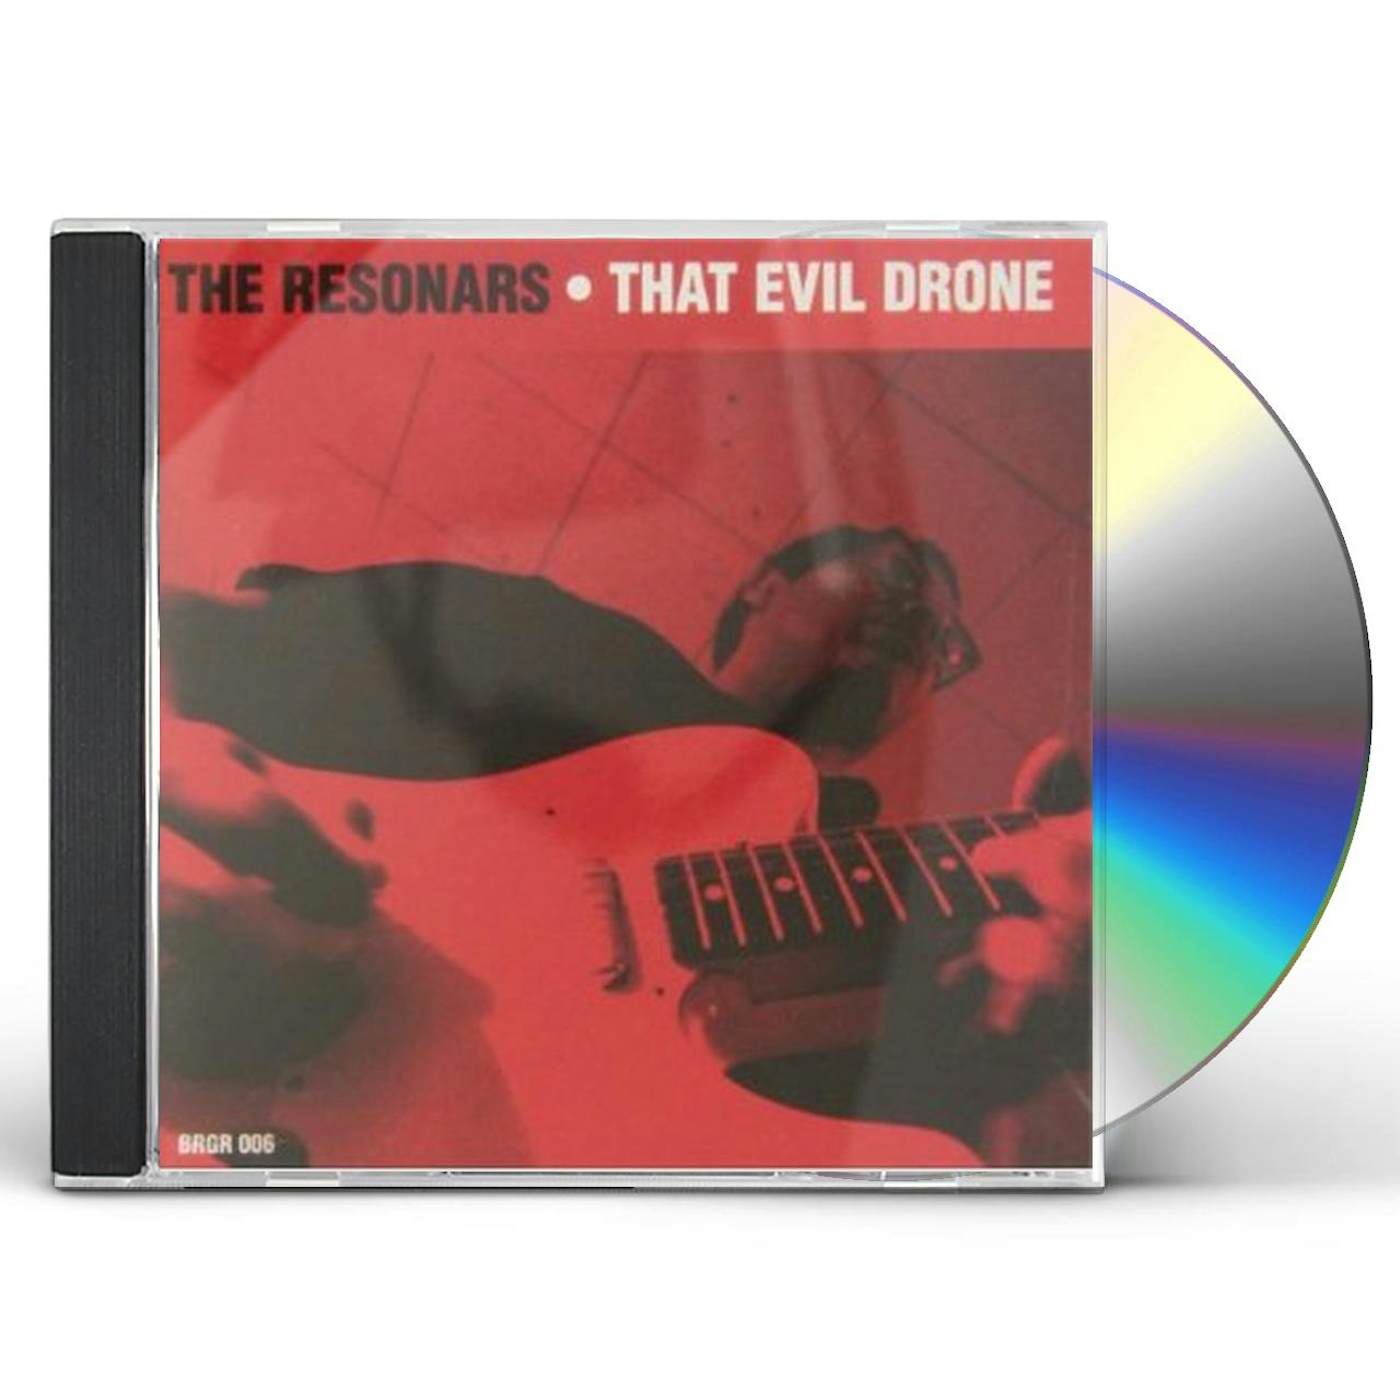 The Resonars THAT EVIL DRONE CD